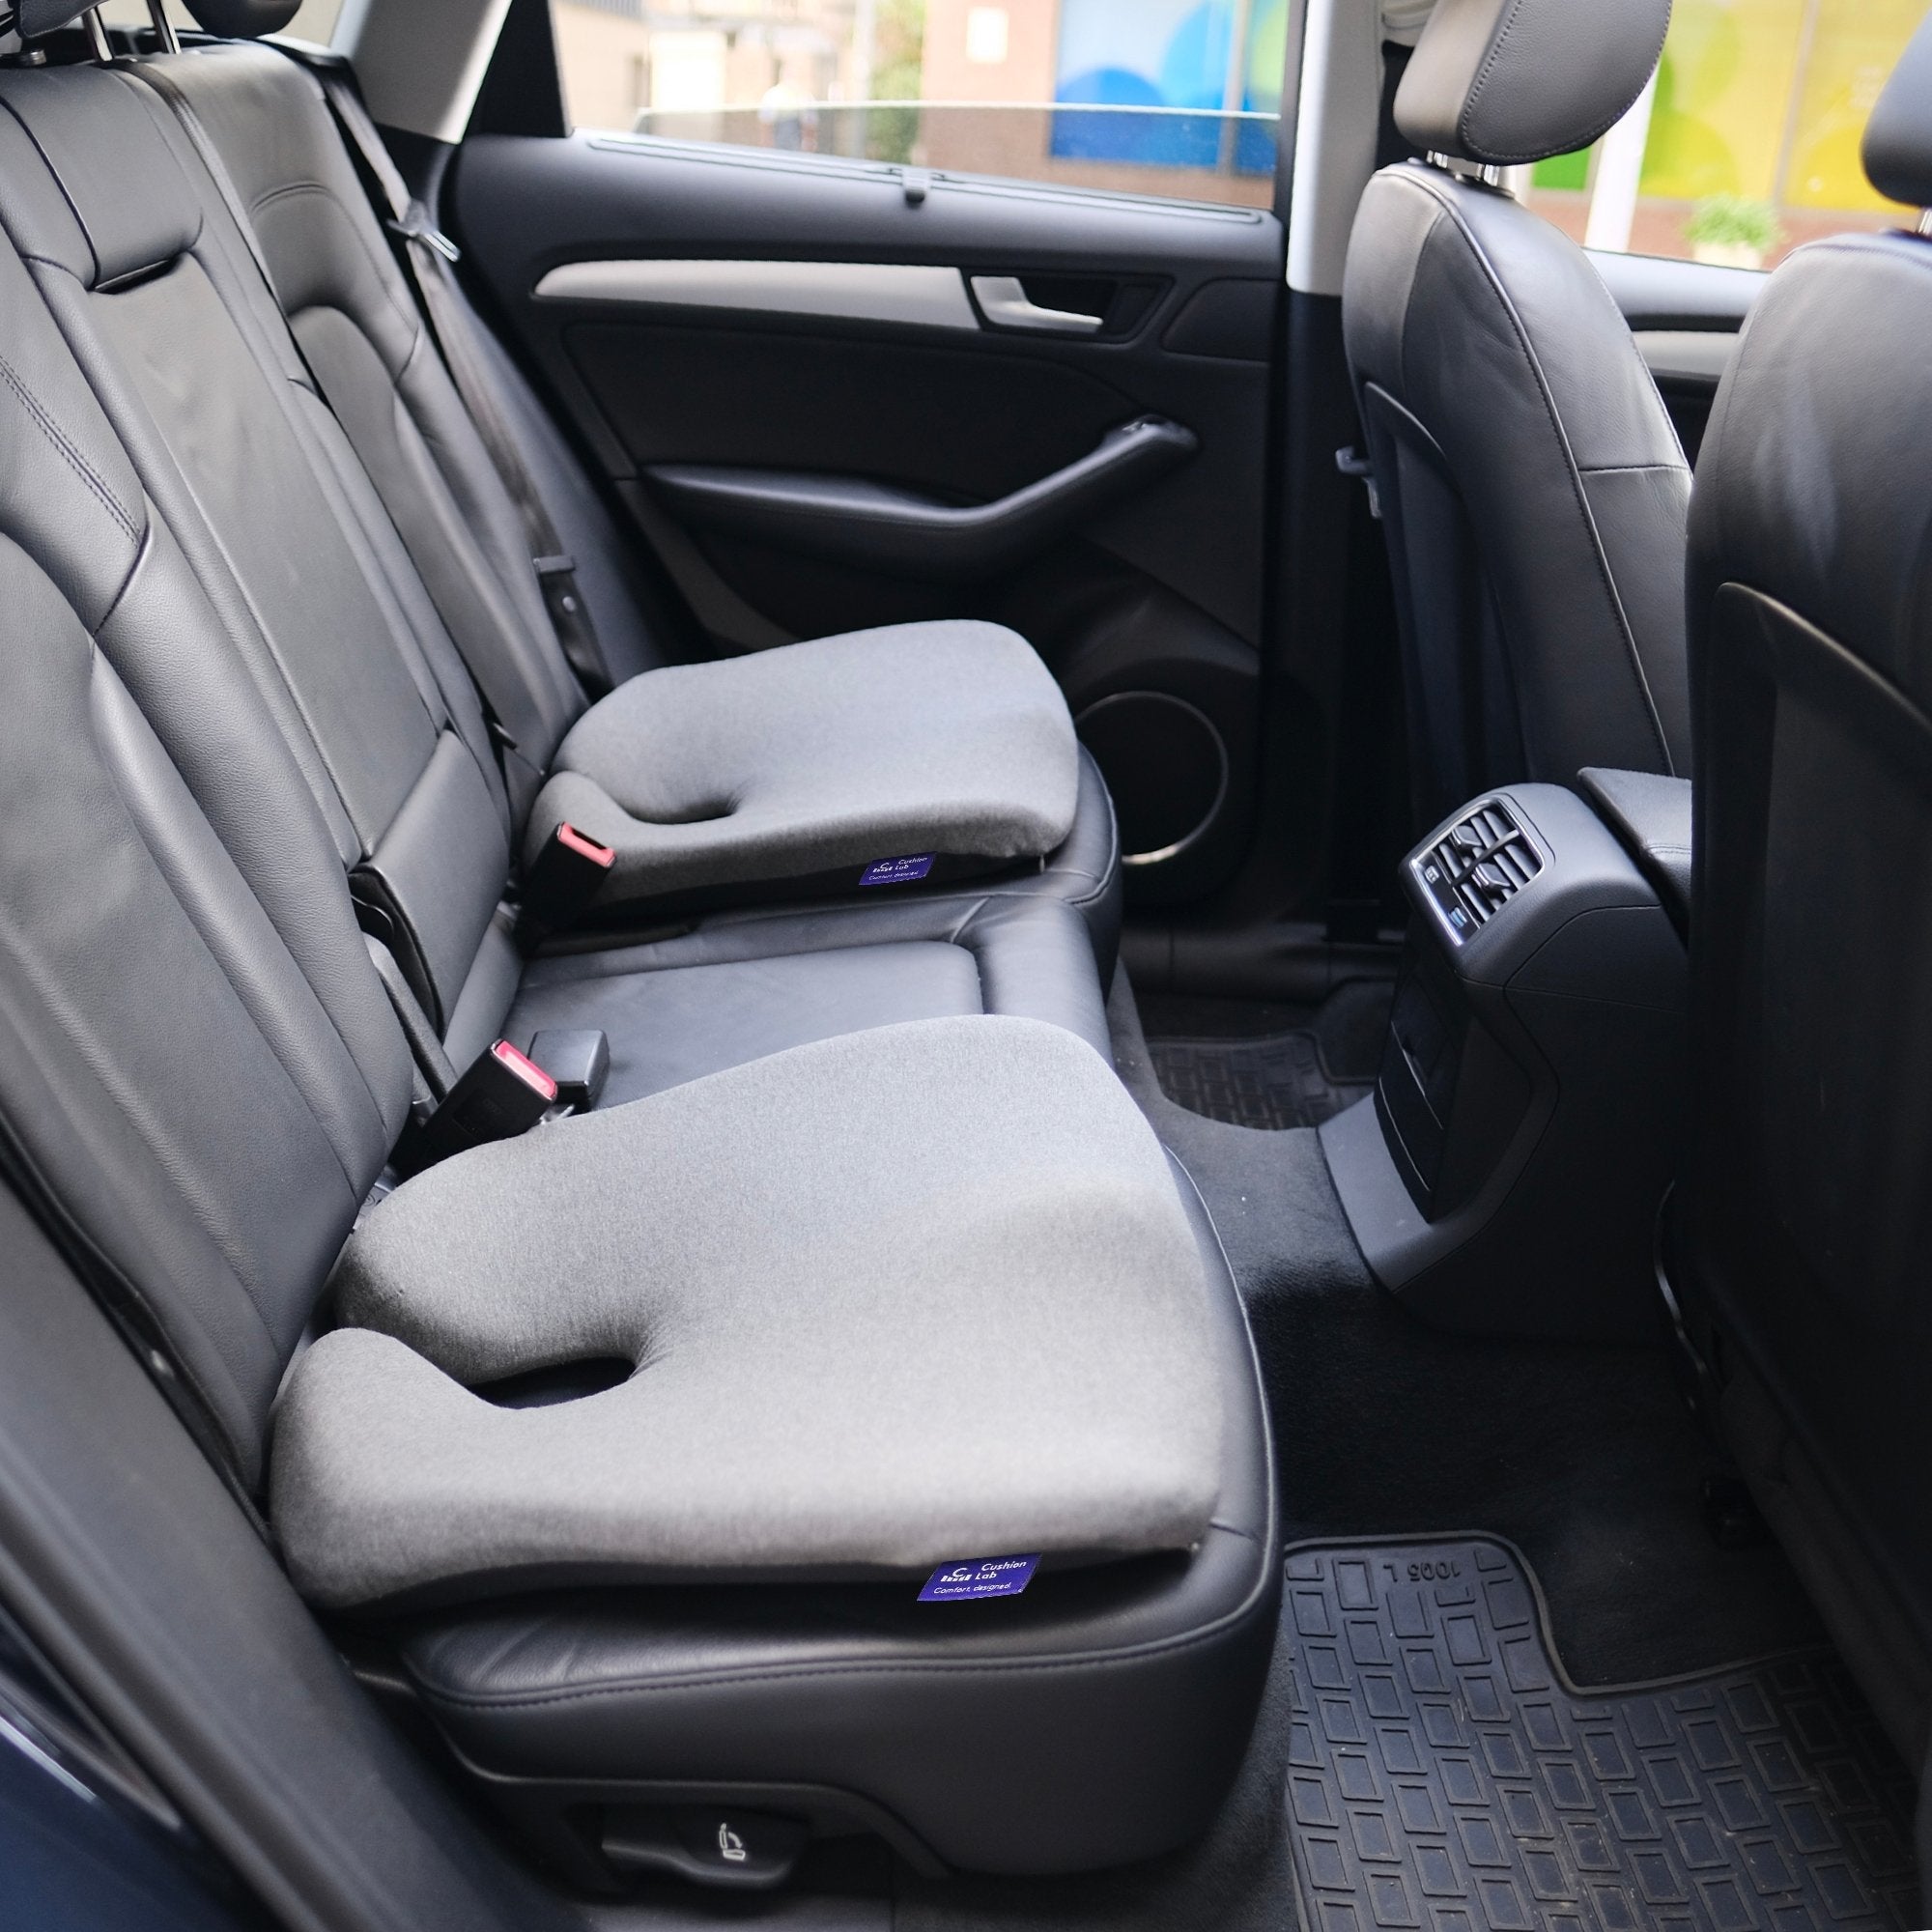 EcoNour Car Pressure Relief Seat Cushion for Sciatica Pain Relief, Anti-Slip